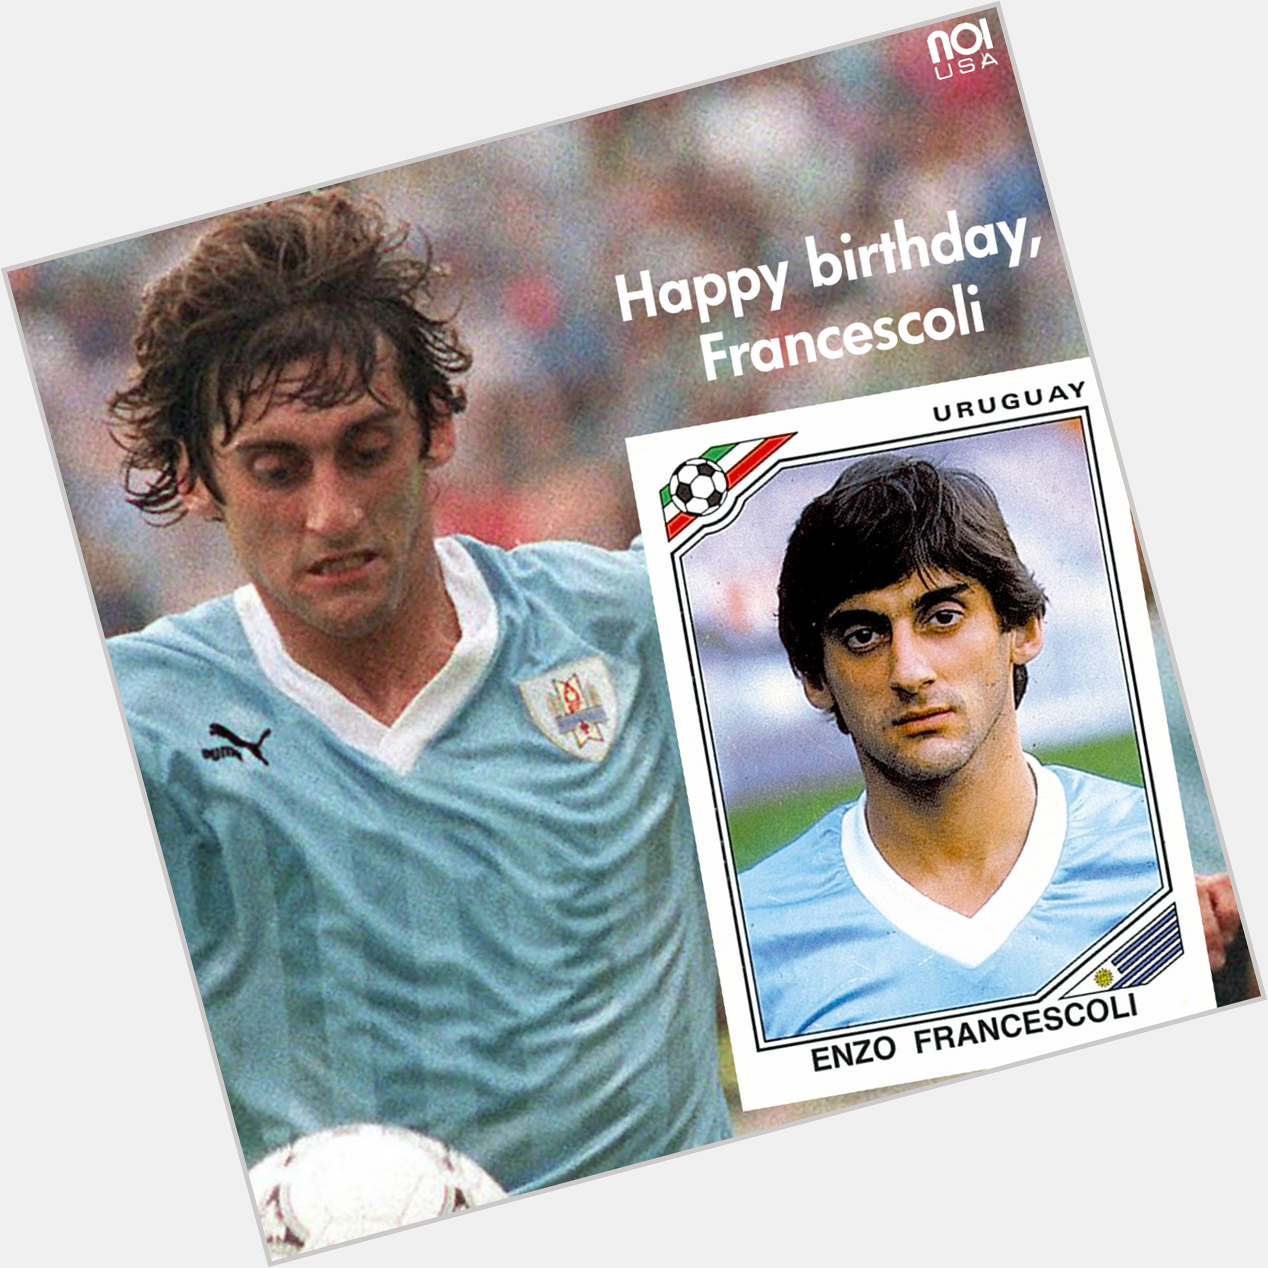 A River legend: Enzo Francescoli! Happy birthday!!! 